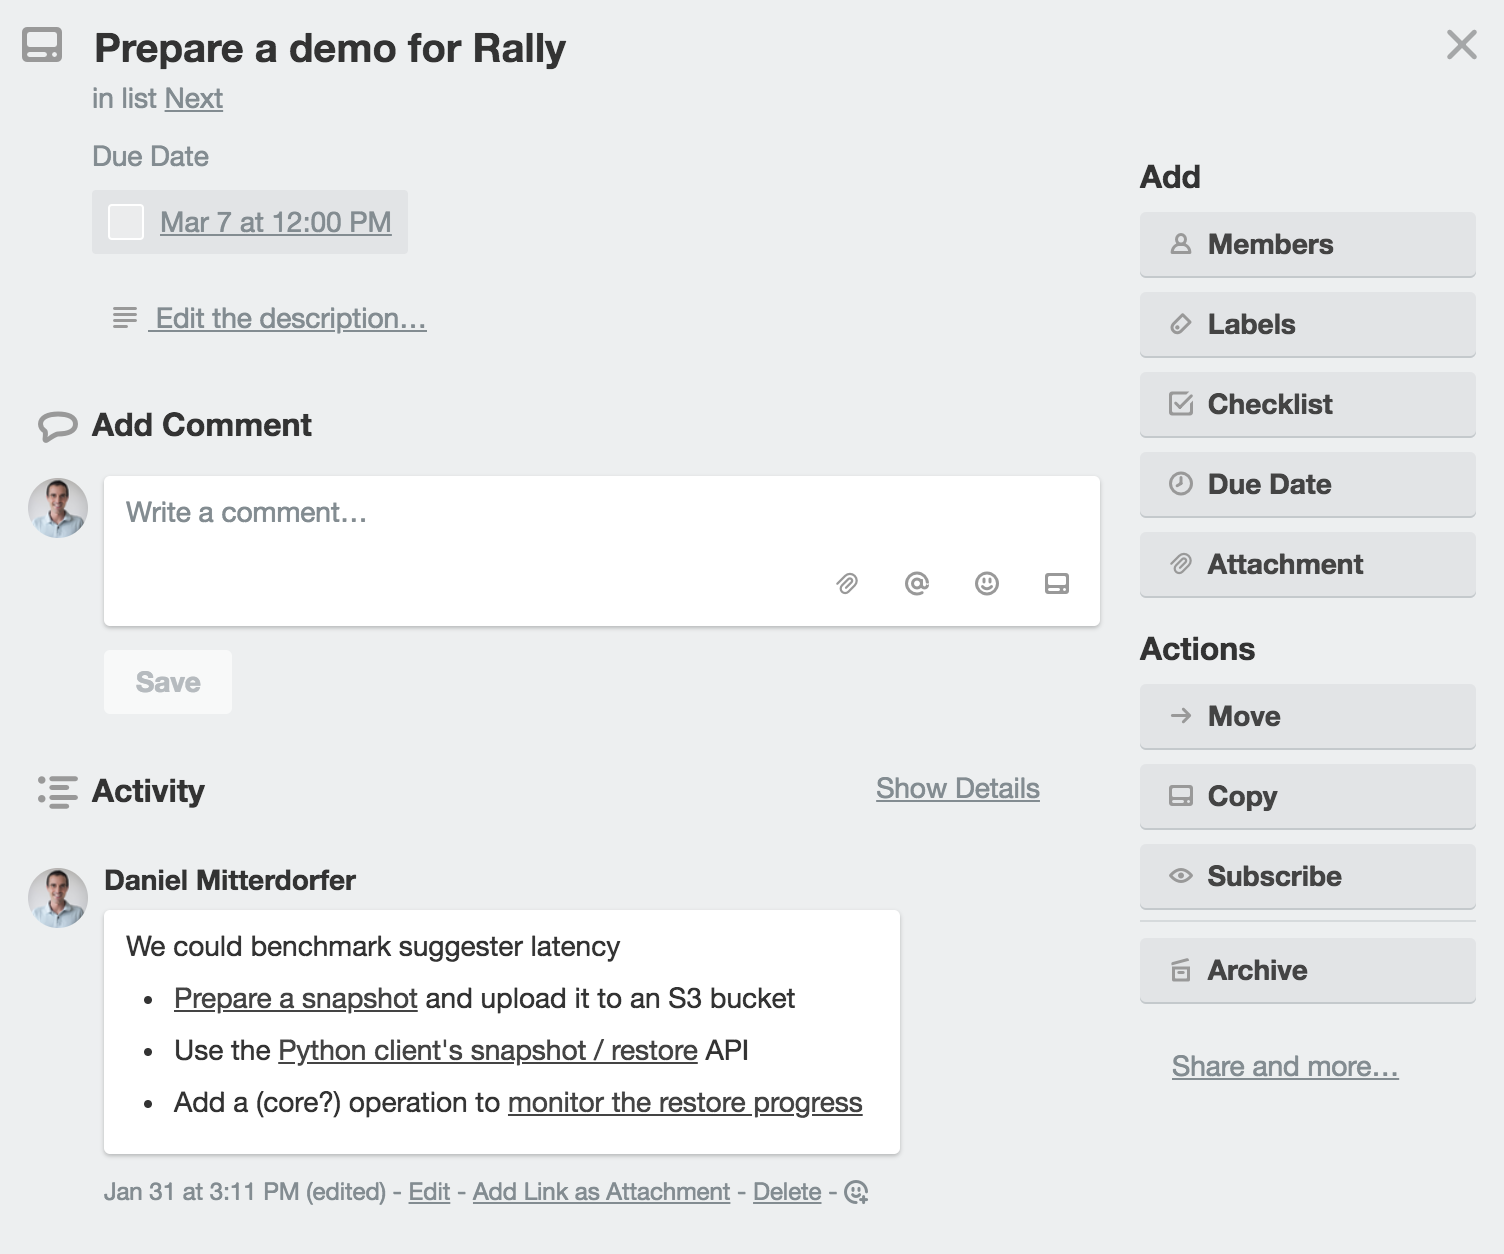 Task Detail: Prepare a demo for Rally